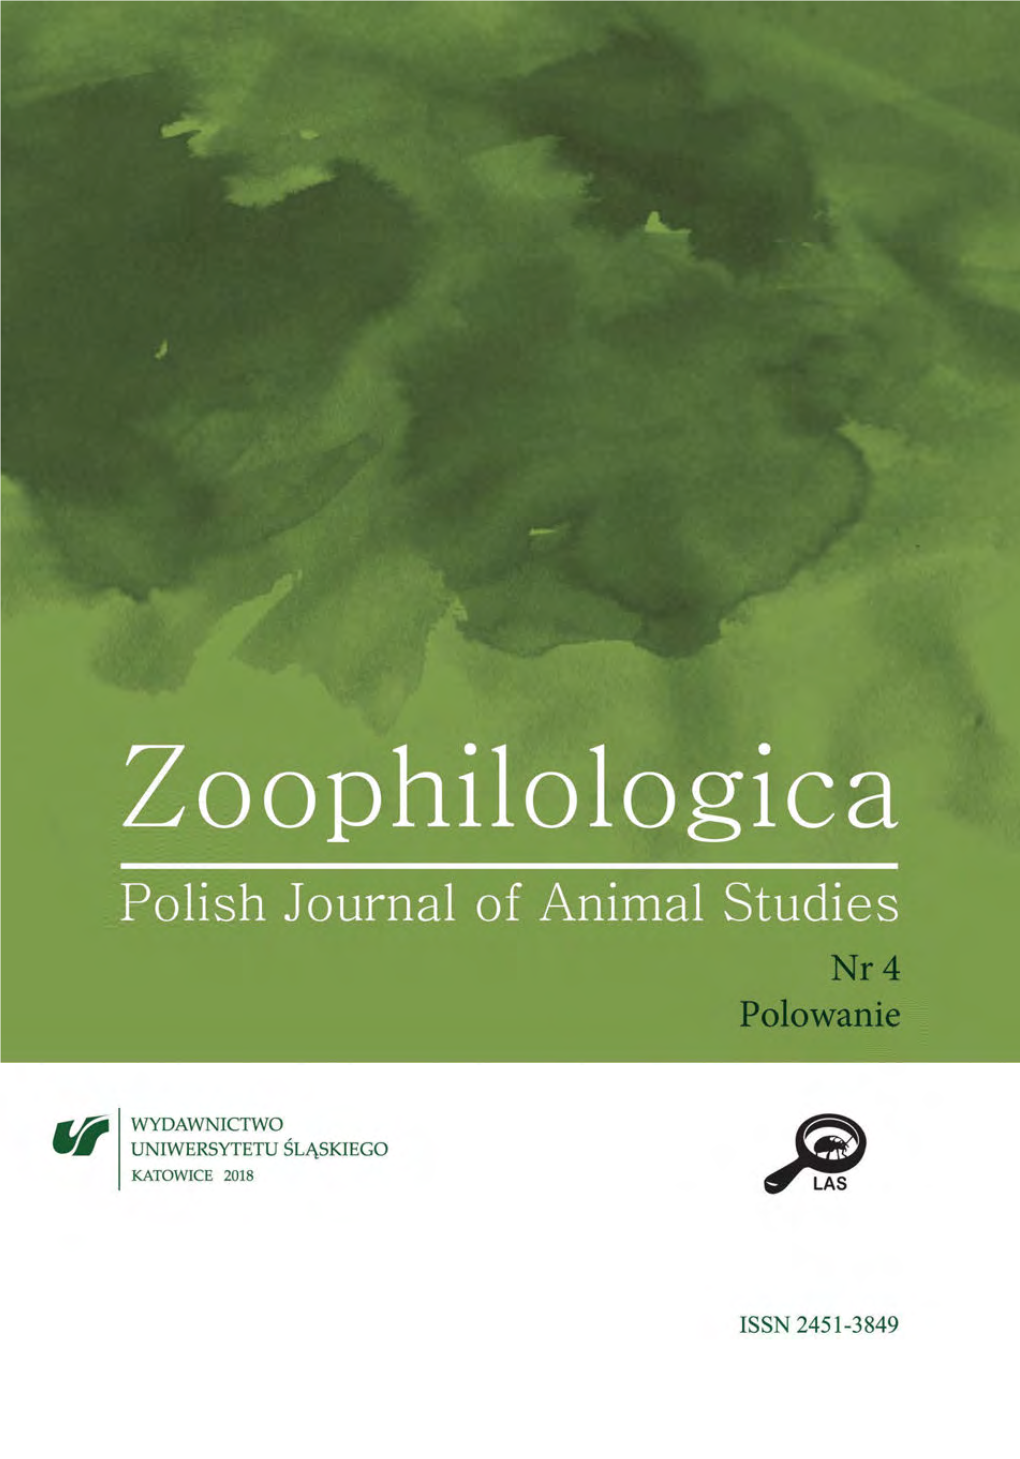 ZOOPHILOLOGICA Polish Journal of Animal Studies